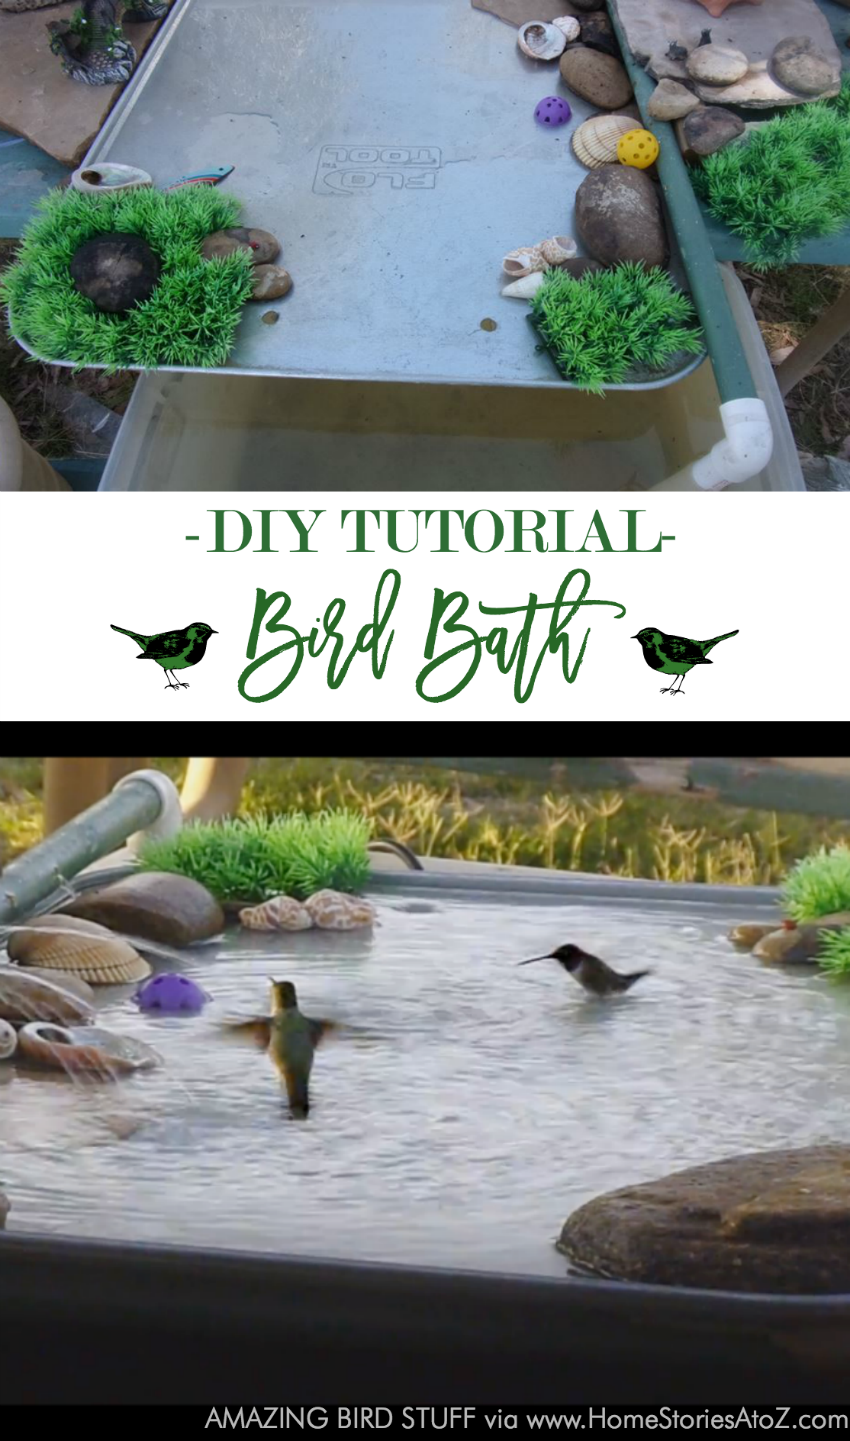 DIY bird bath tutorial